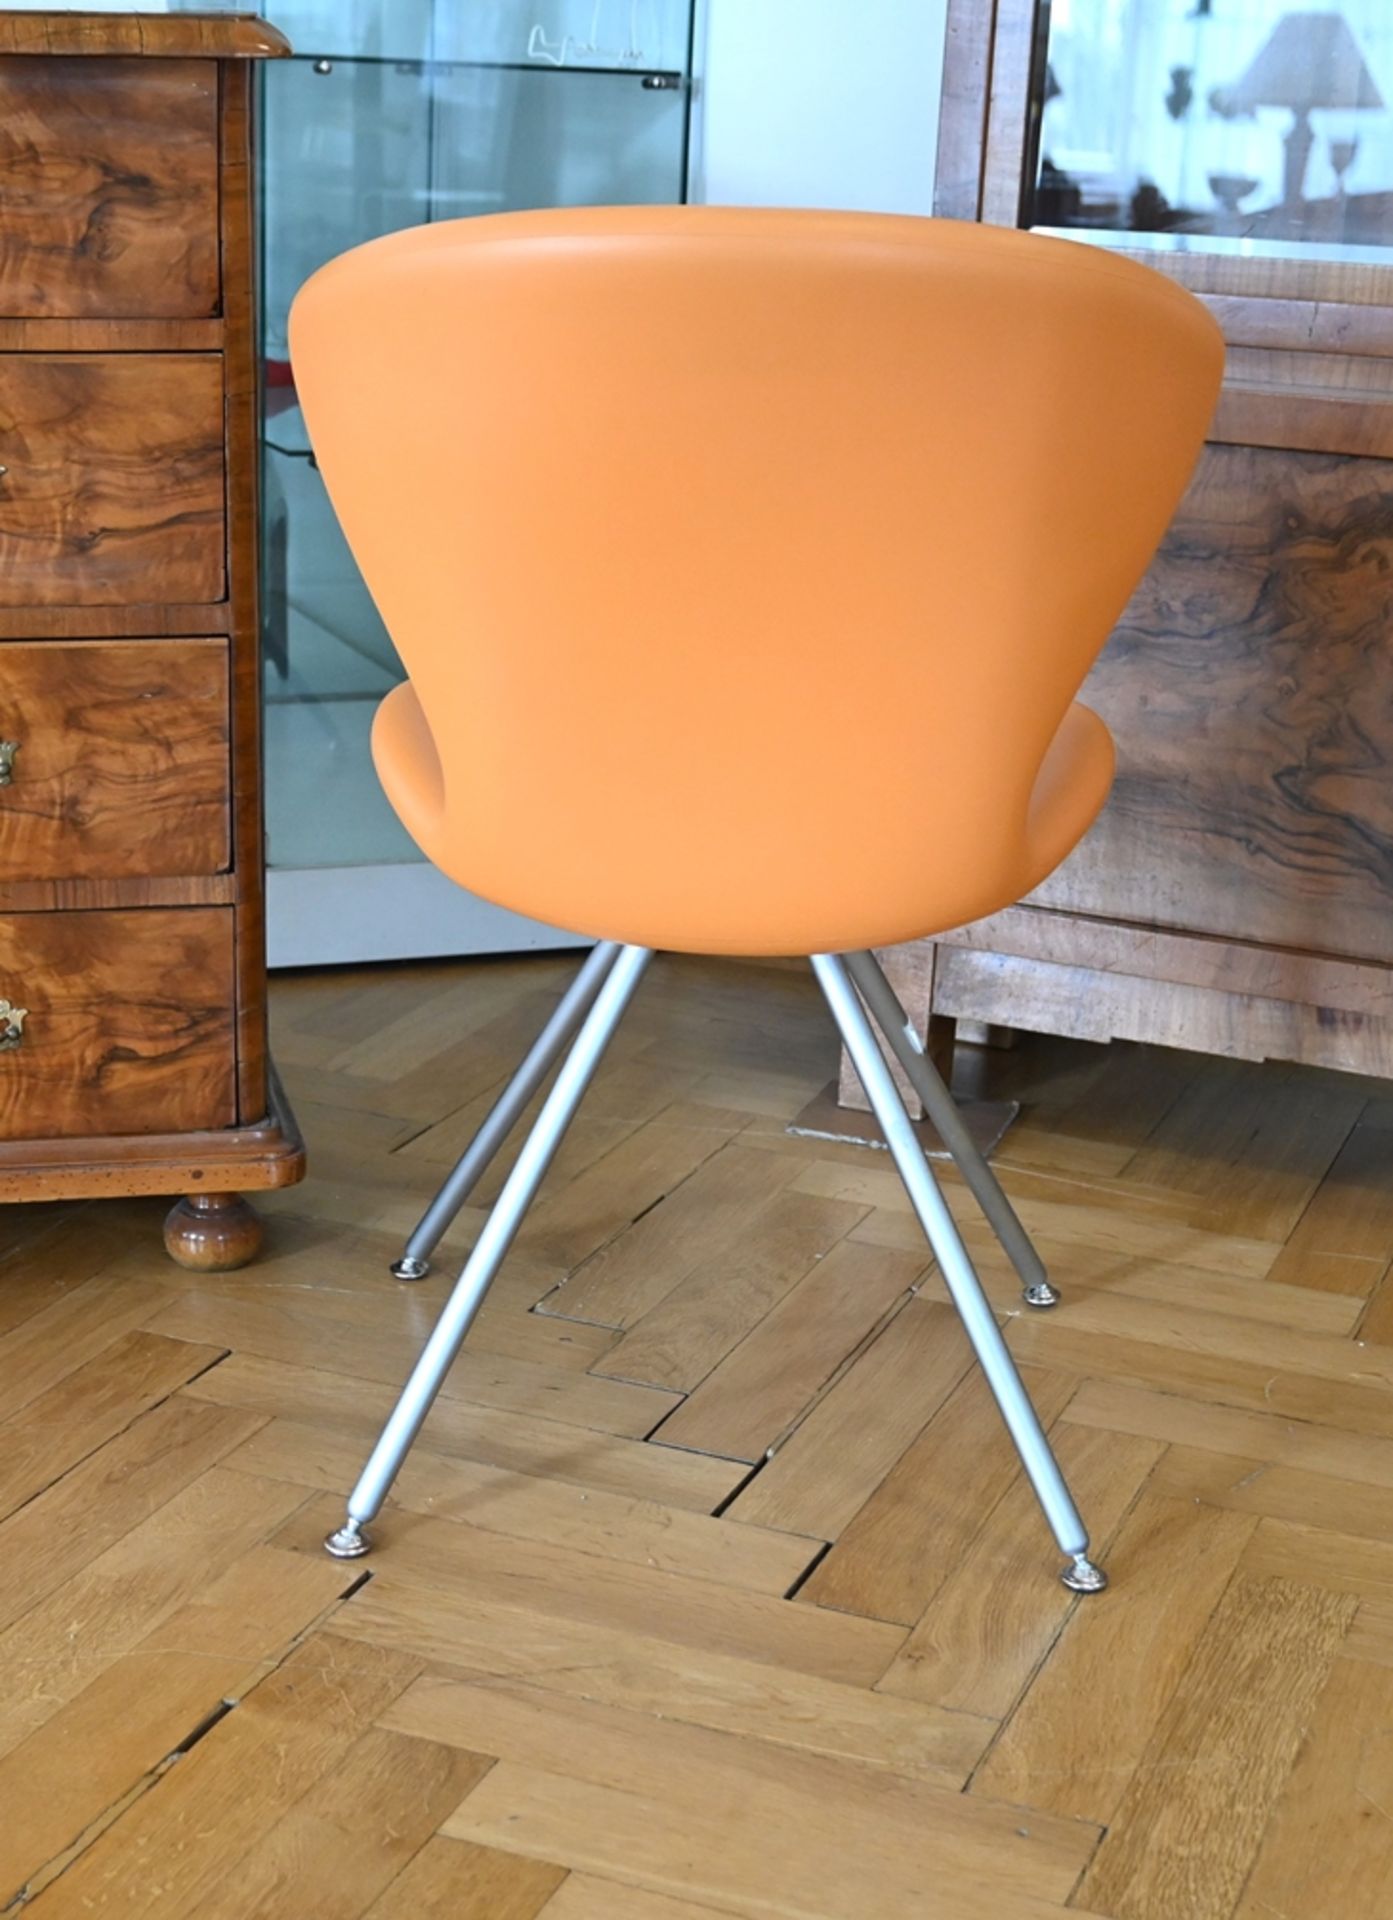 Design chair, Tonon Concept 902 with metal feet, curved shape, design Martin Ballendat (1958 Bochum - Image 3 of 4